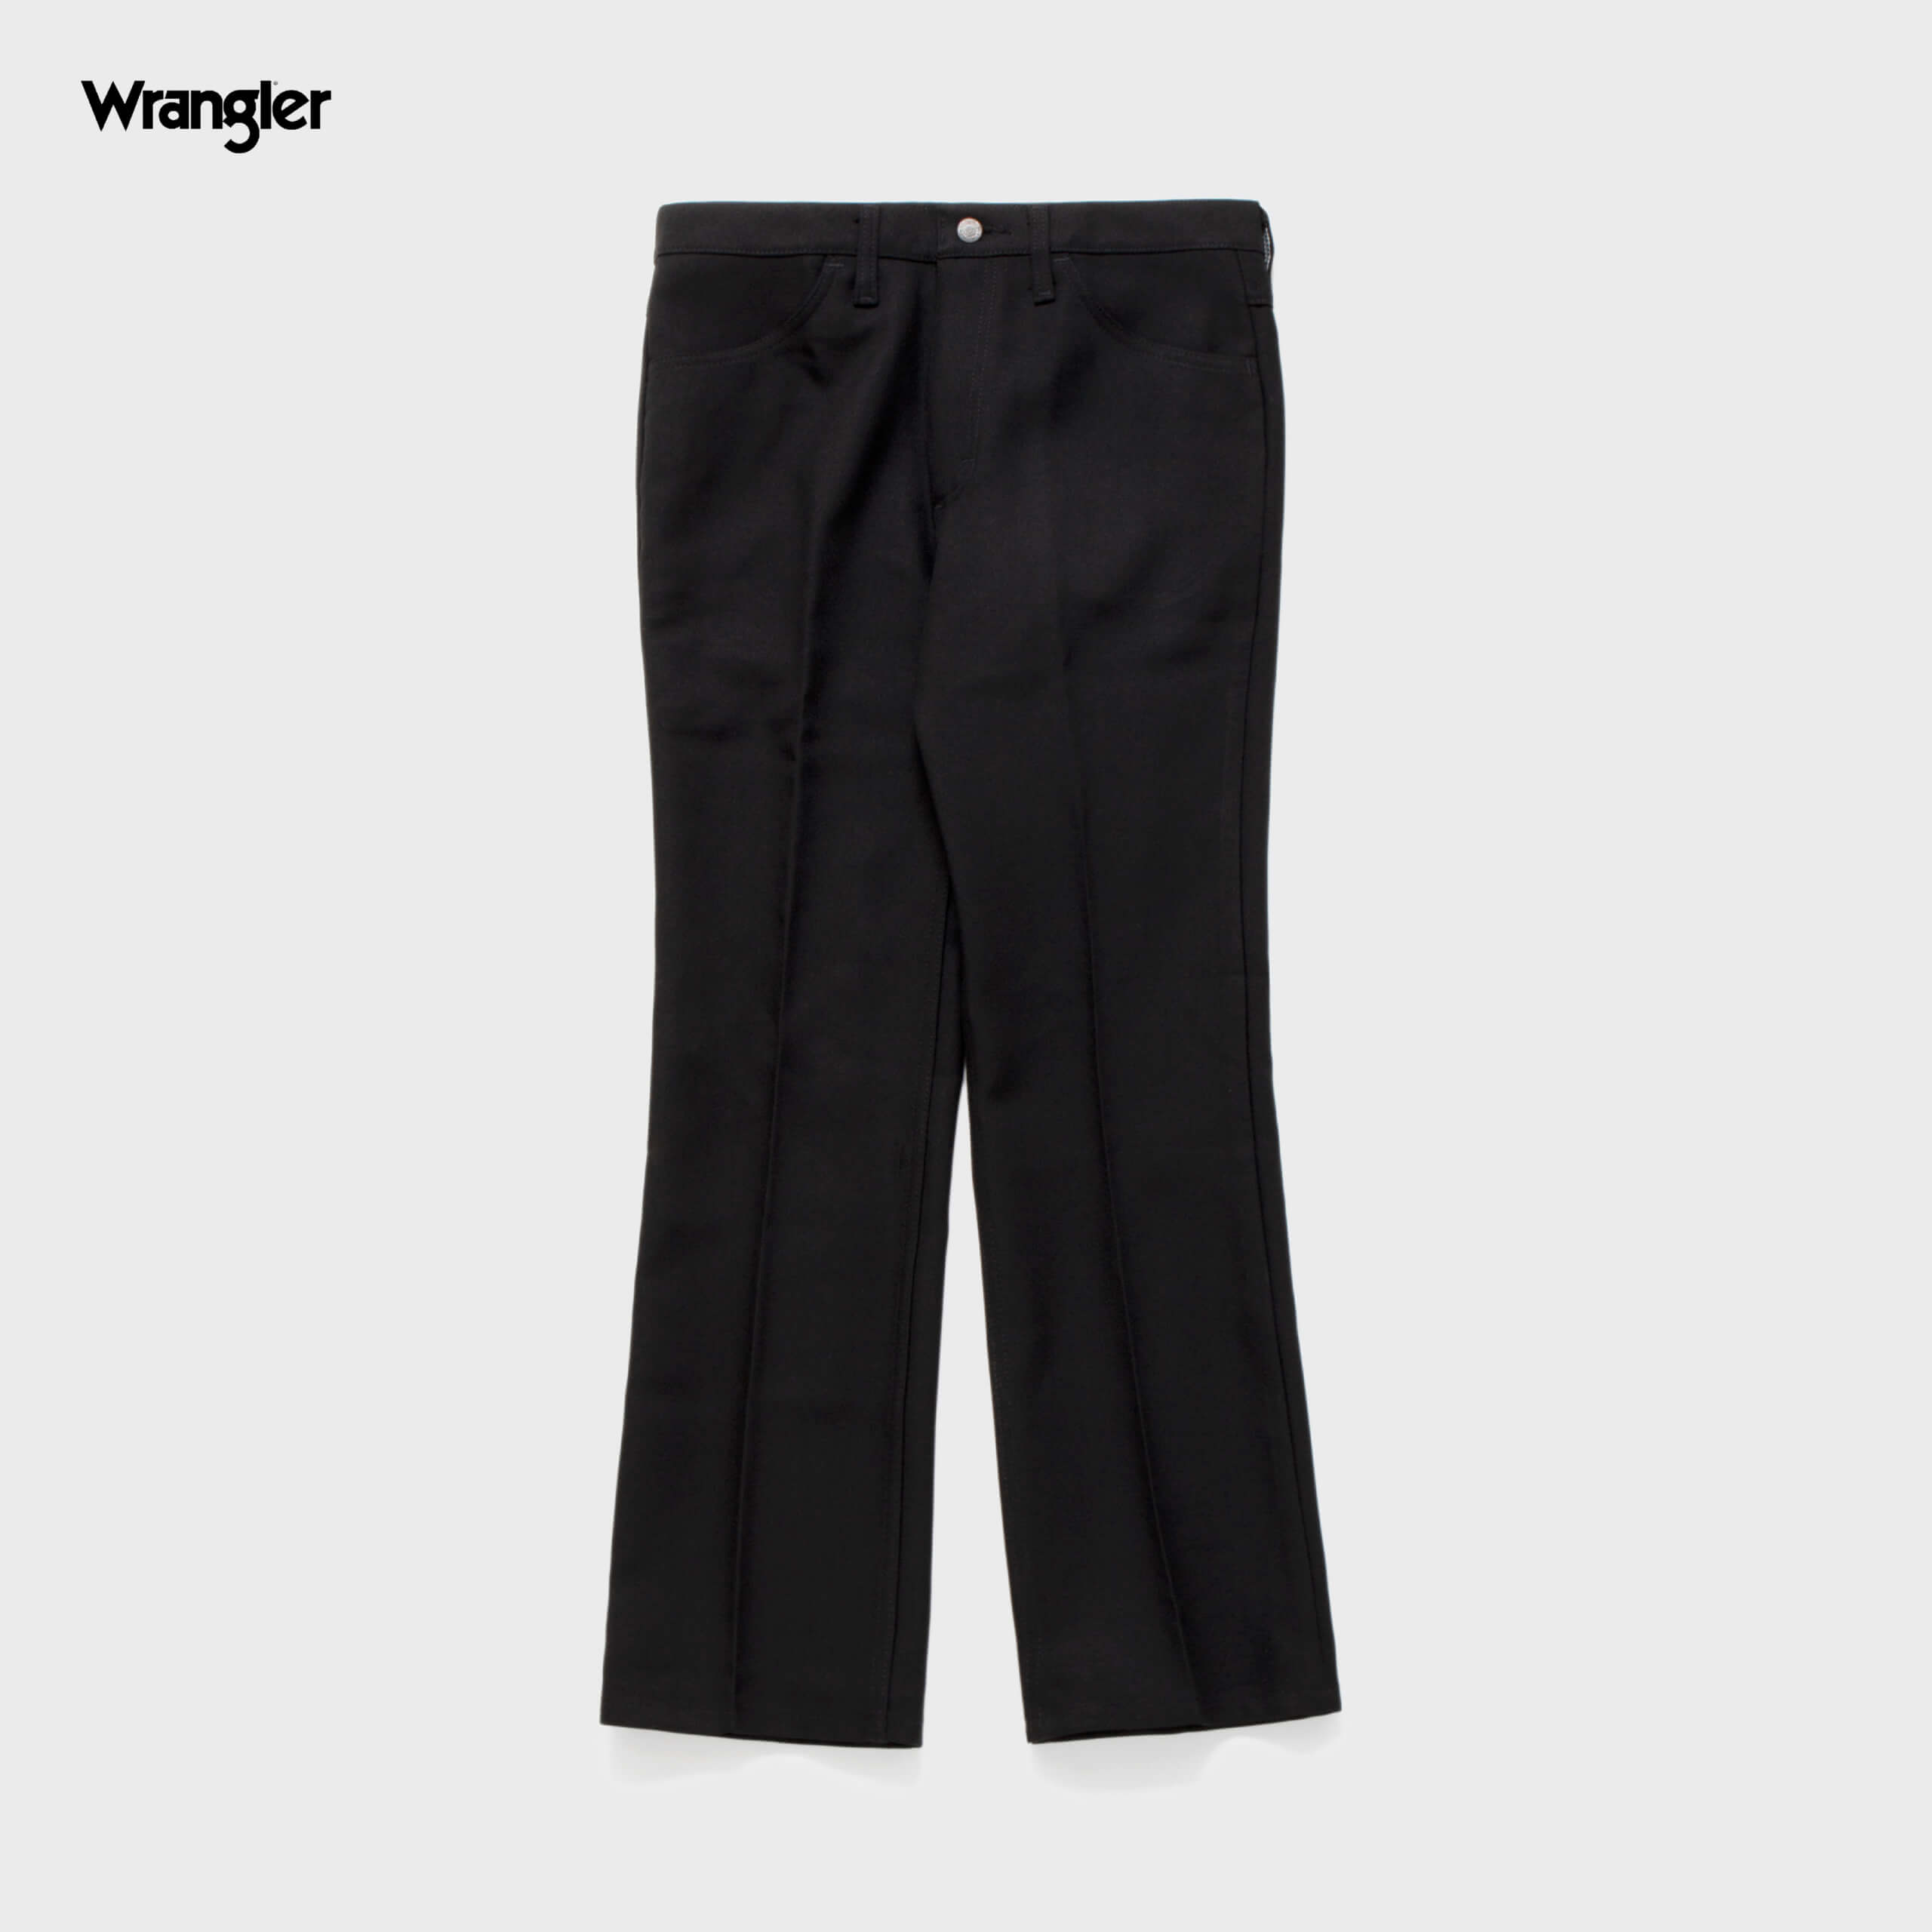 wrangler-wrancher-dress-jeans-black_p2